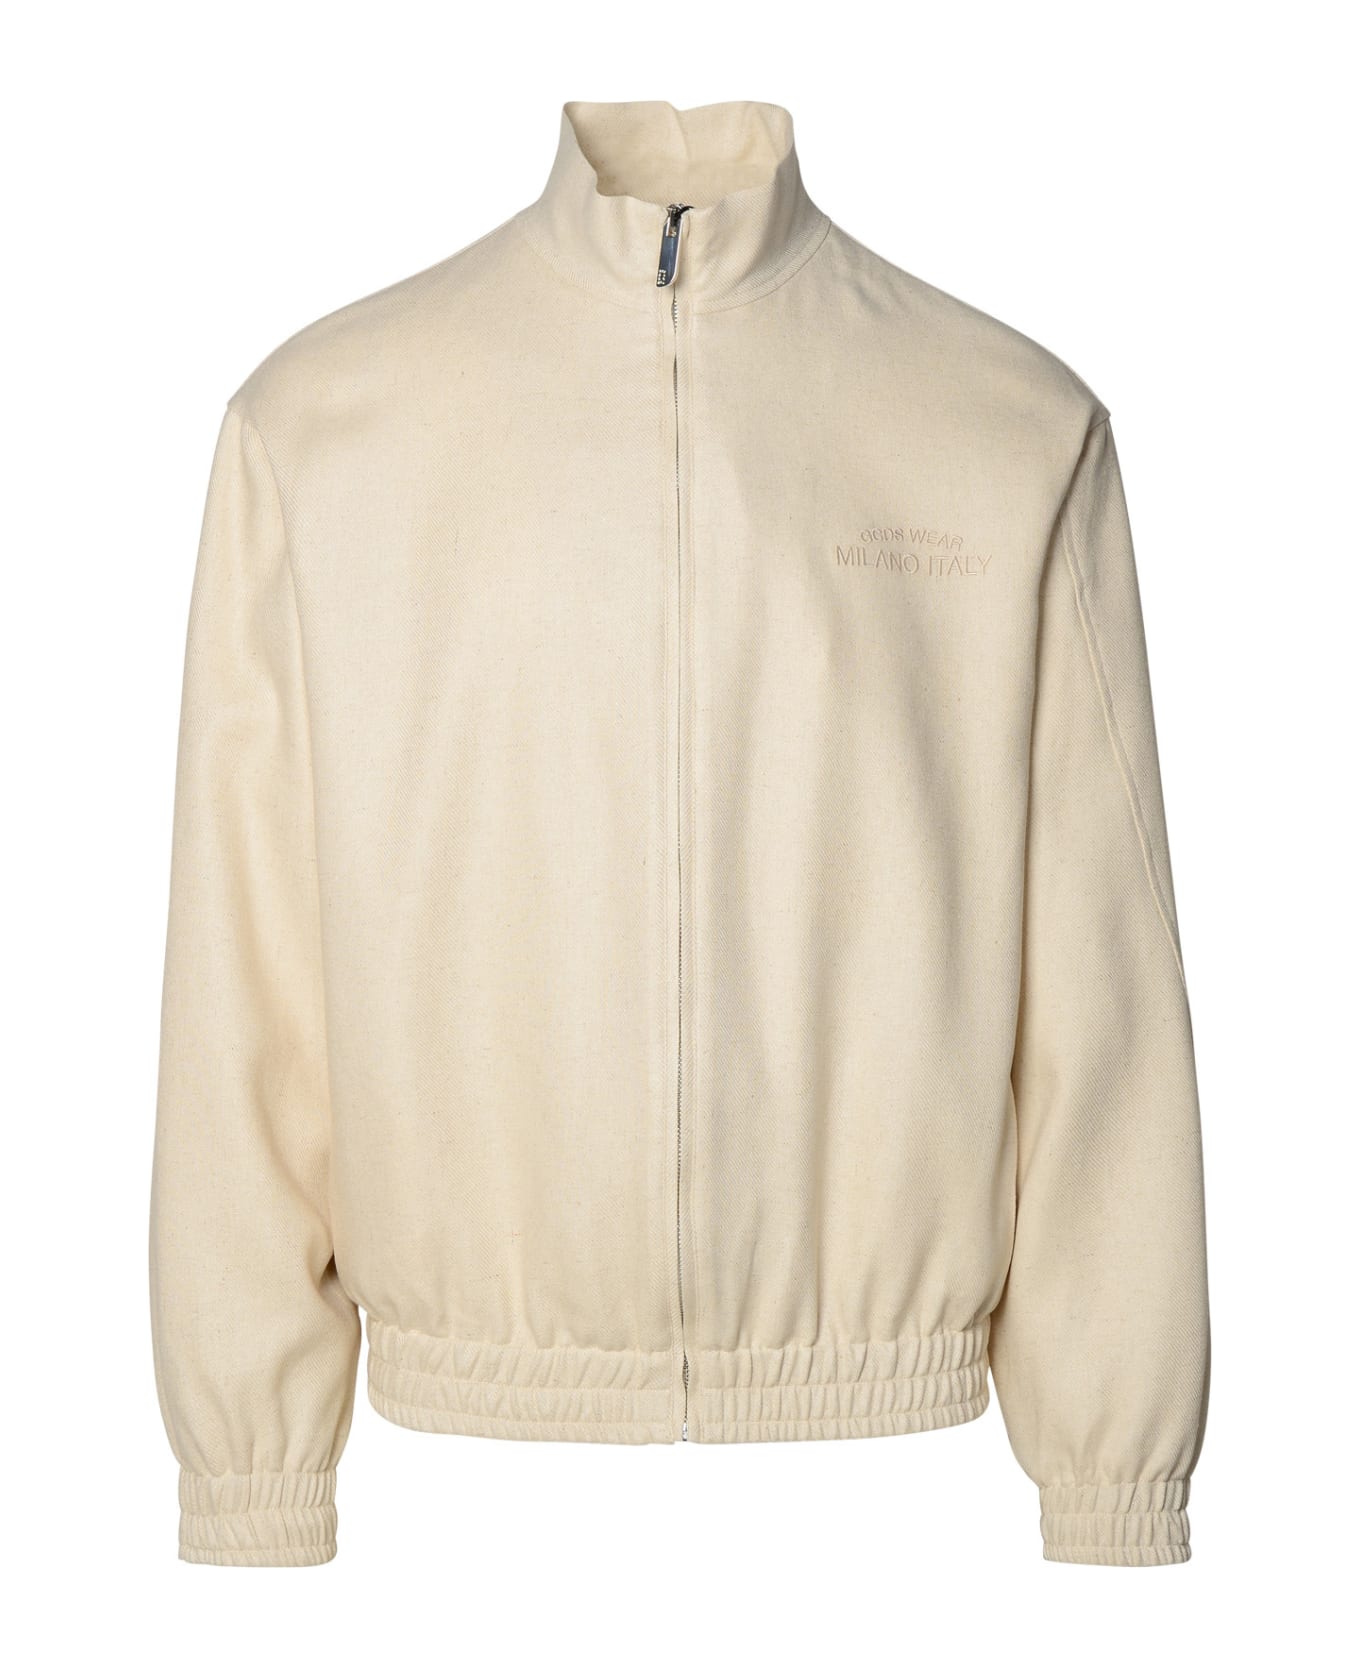 GCDS Ivory Linen Blend Jacket - Bianco sporco